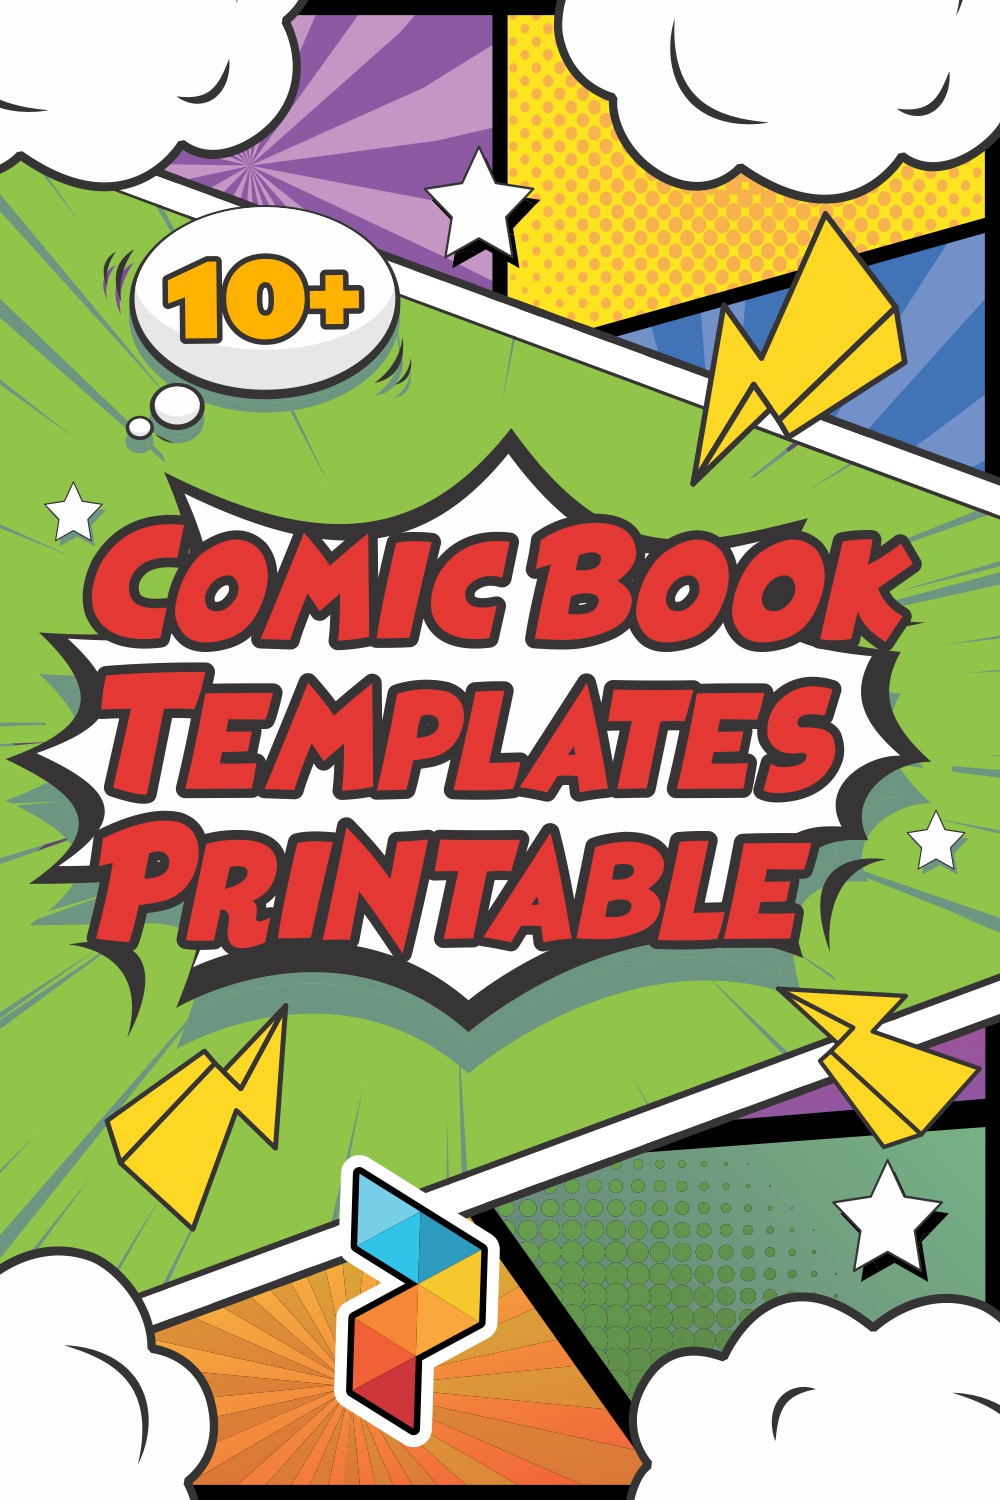 Comic Book Templates Printable